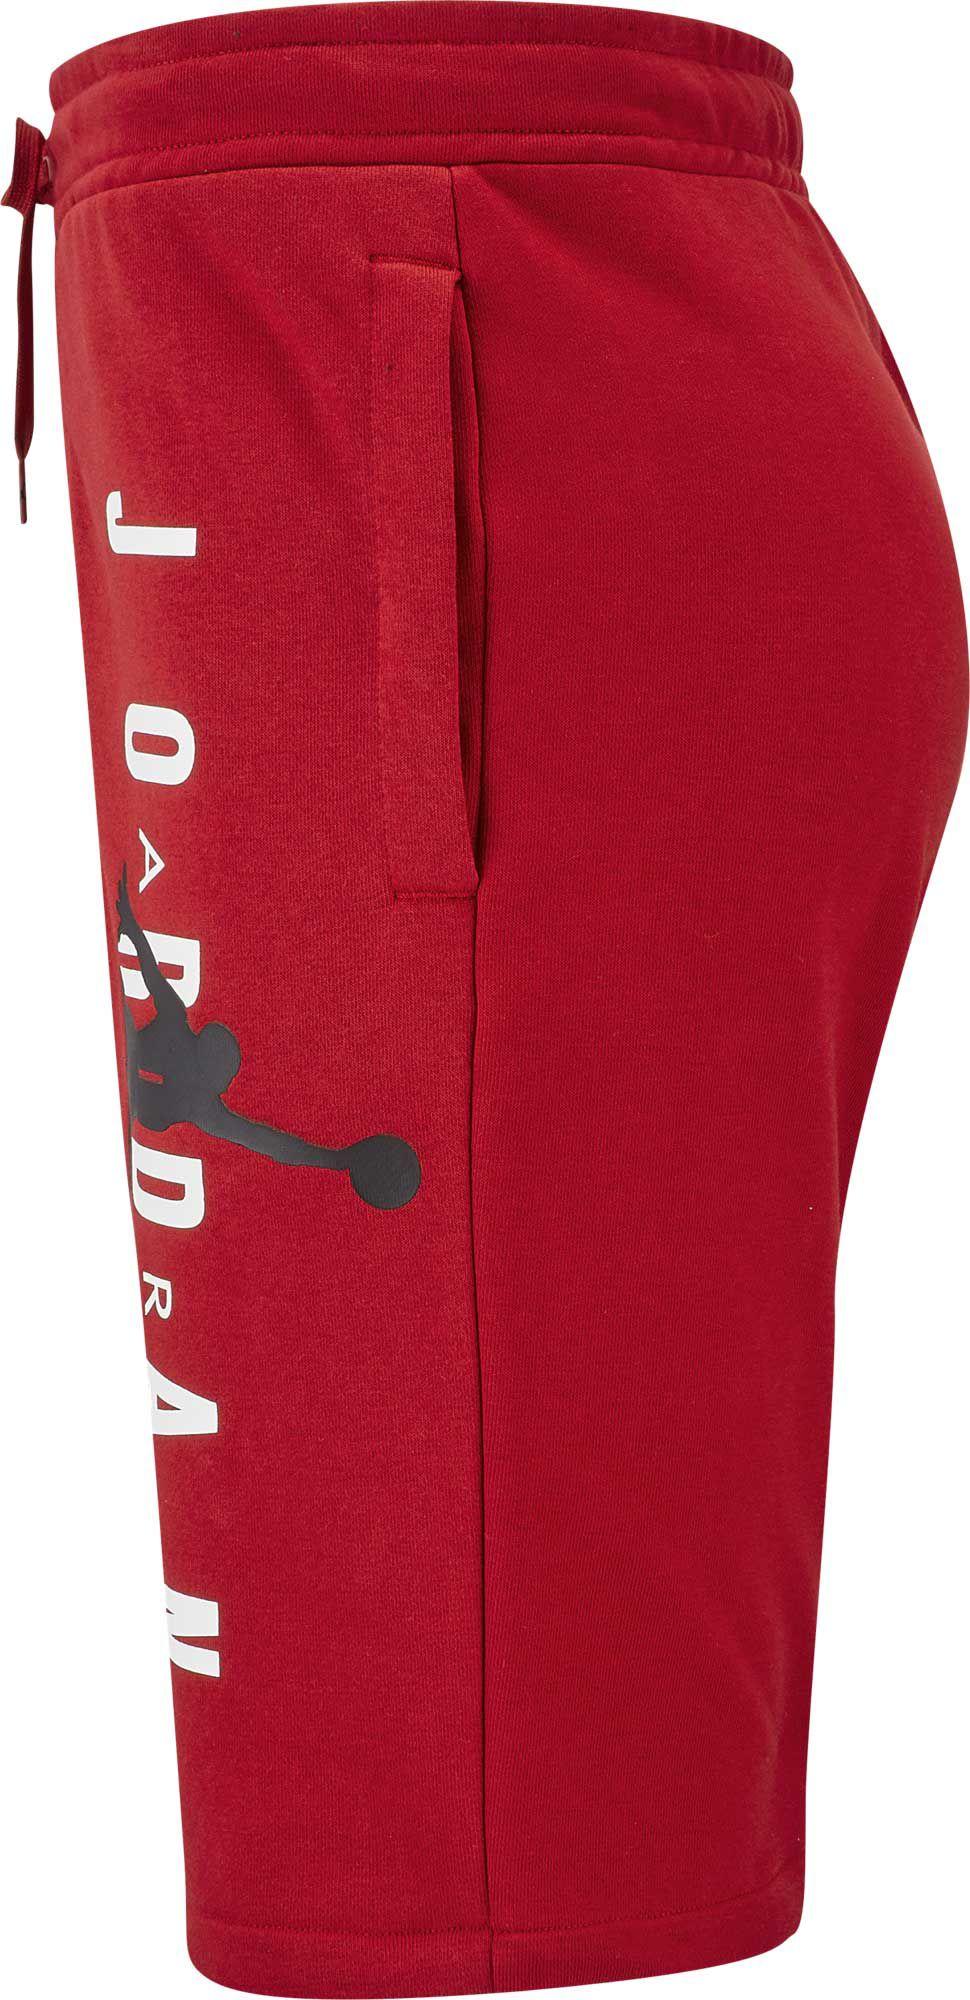 Lyst - Nike Jordan Jumpman Air Fleece Shorts in Red for Men